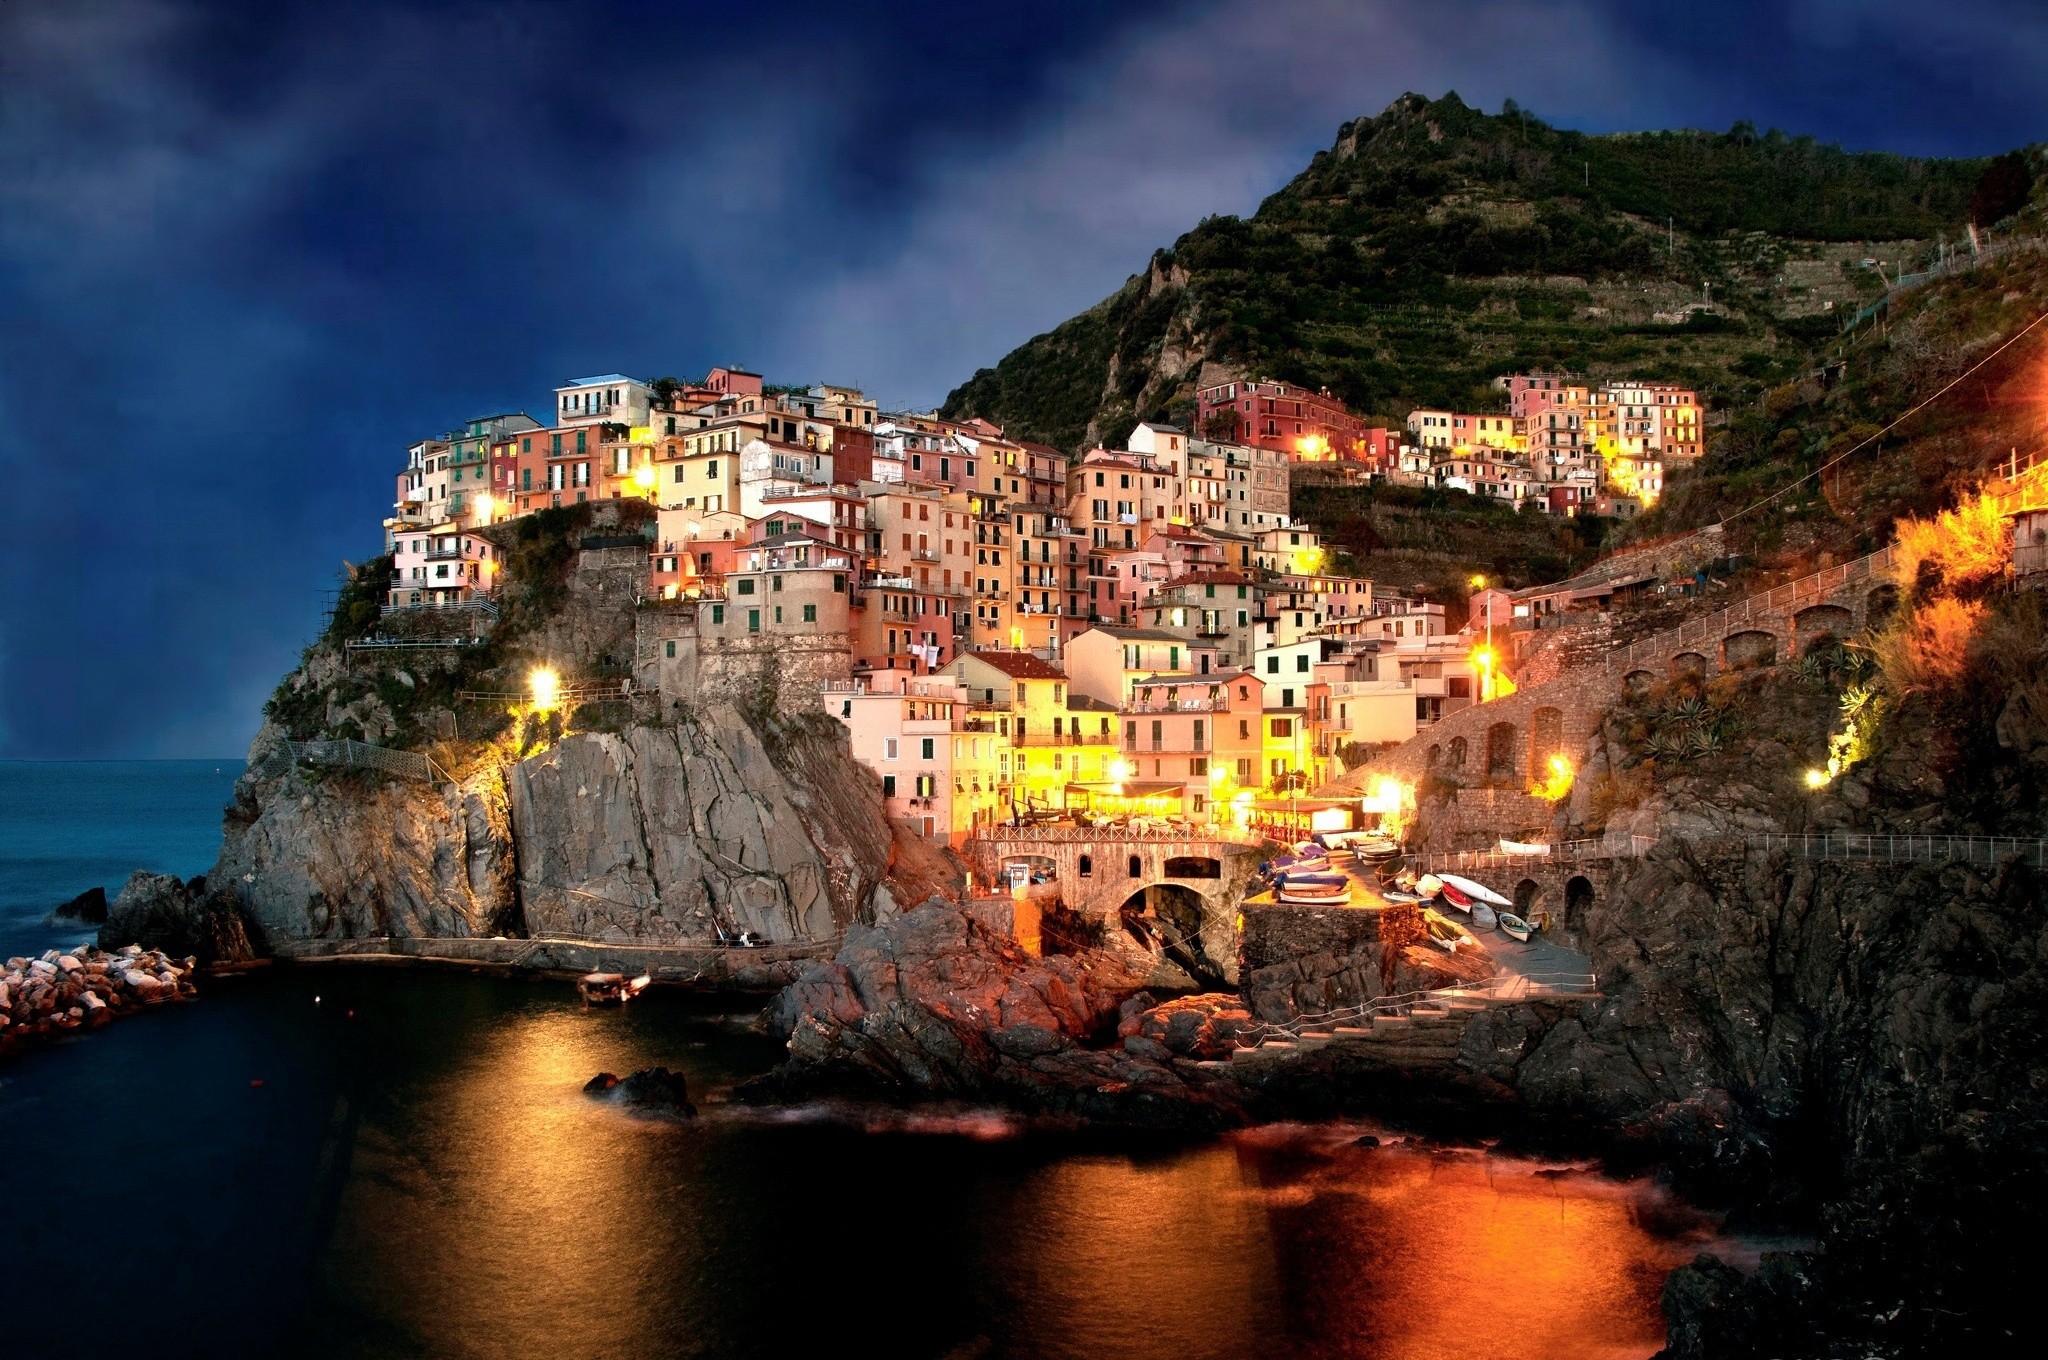 2048x1360 Evening lights in the resort of Positano, Italy